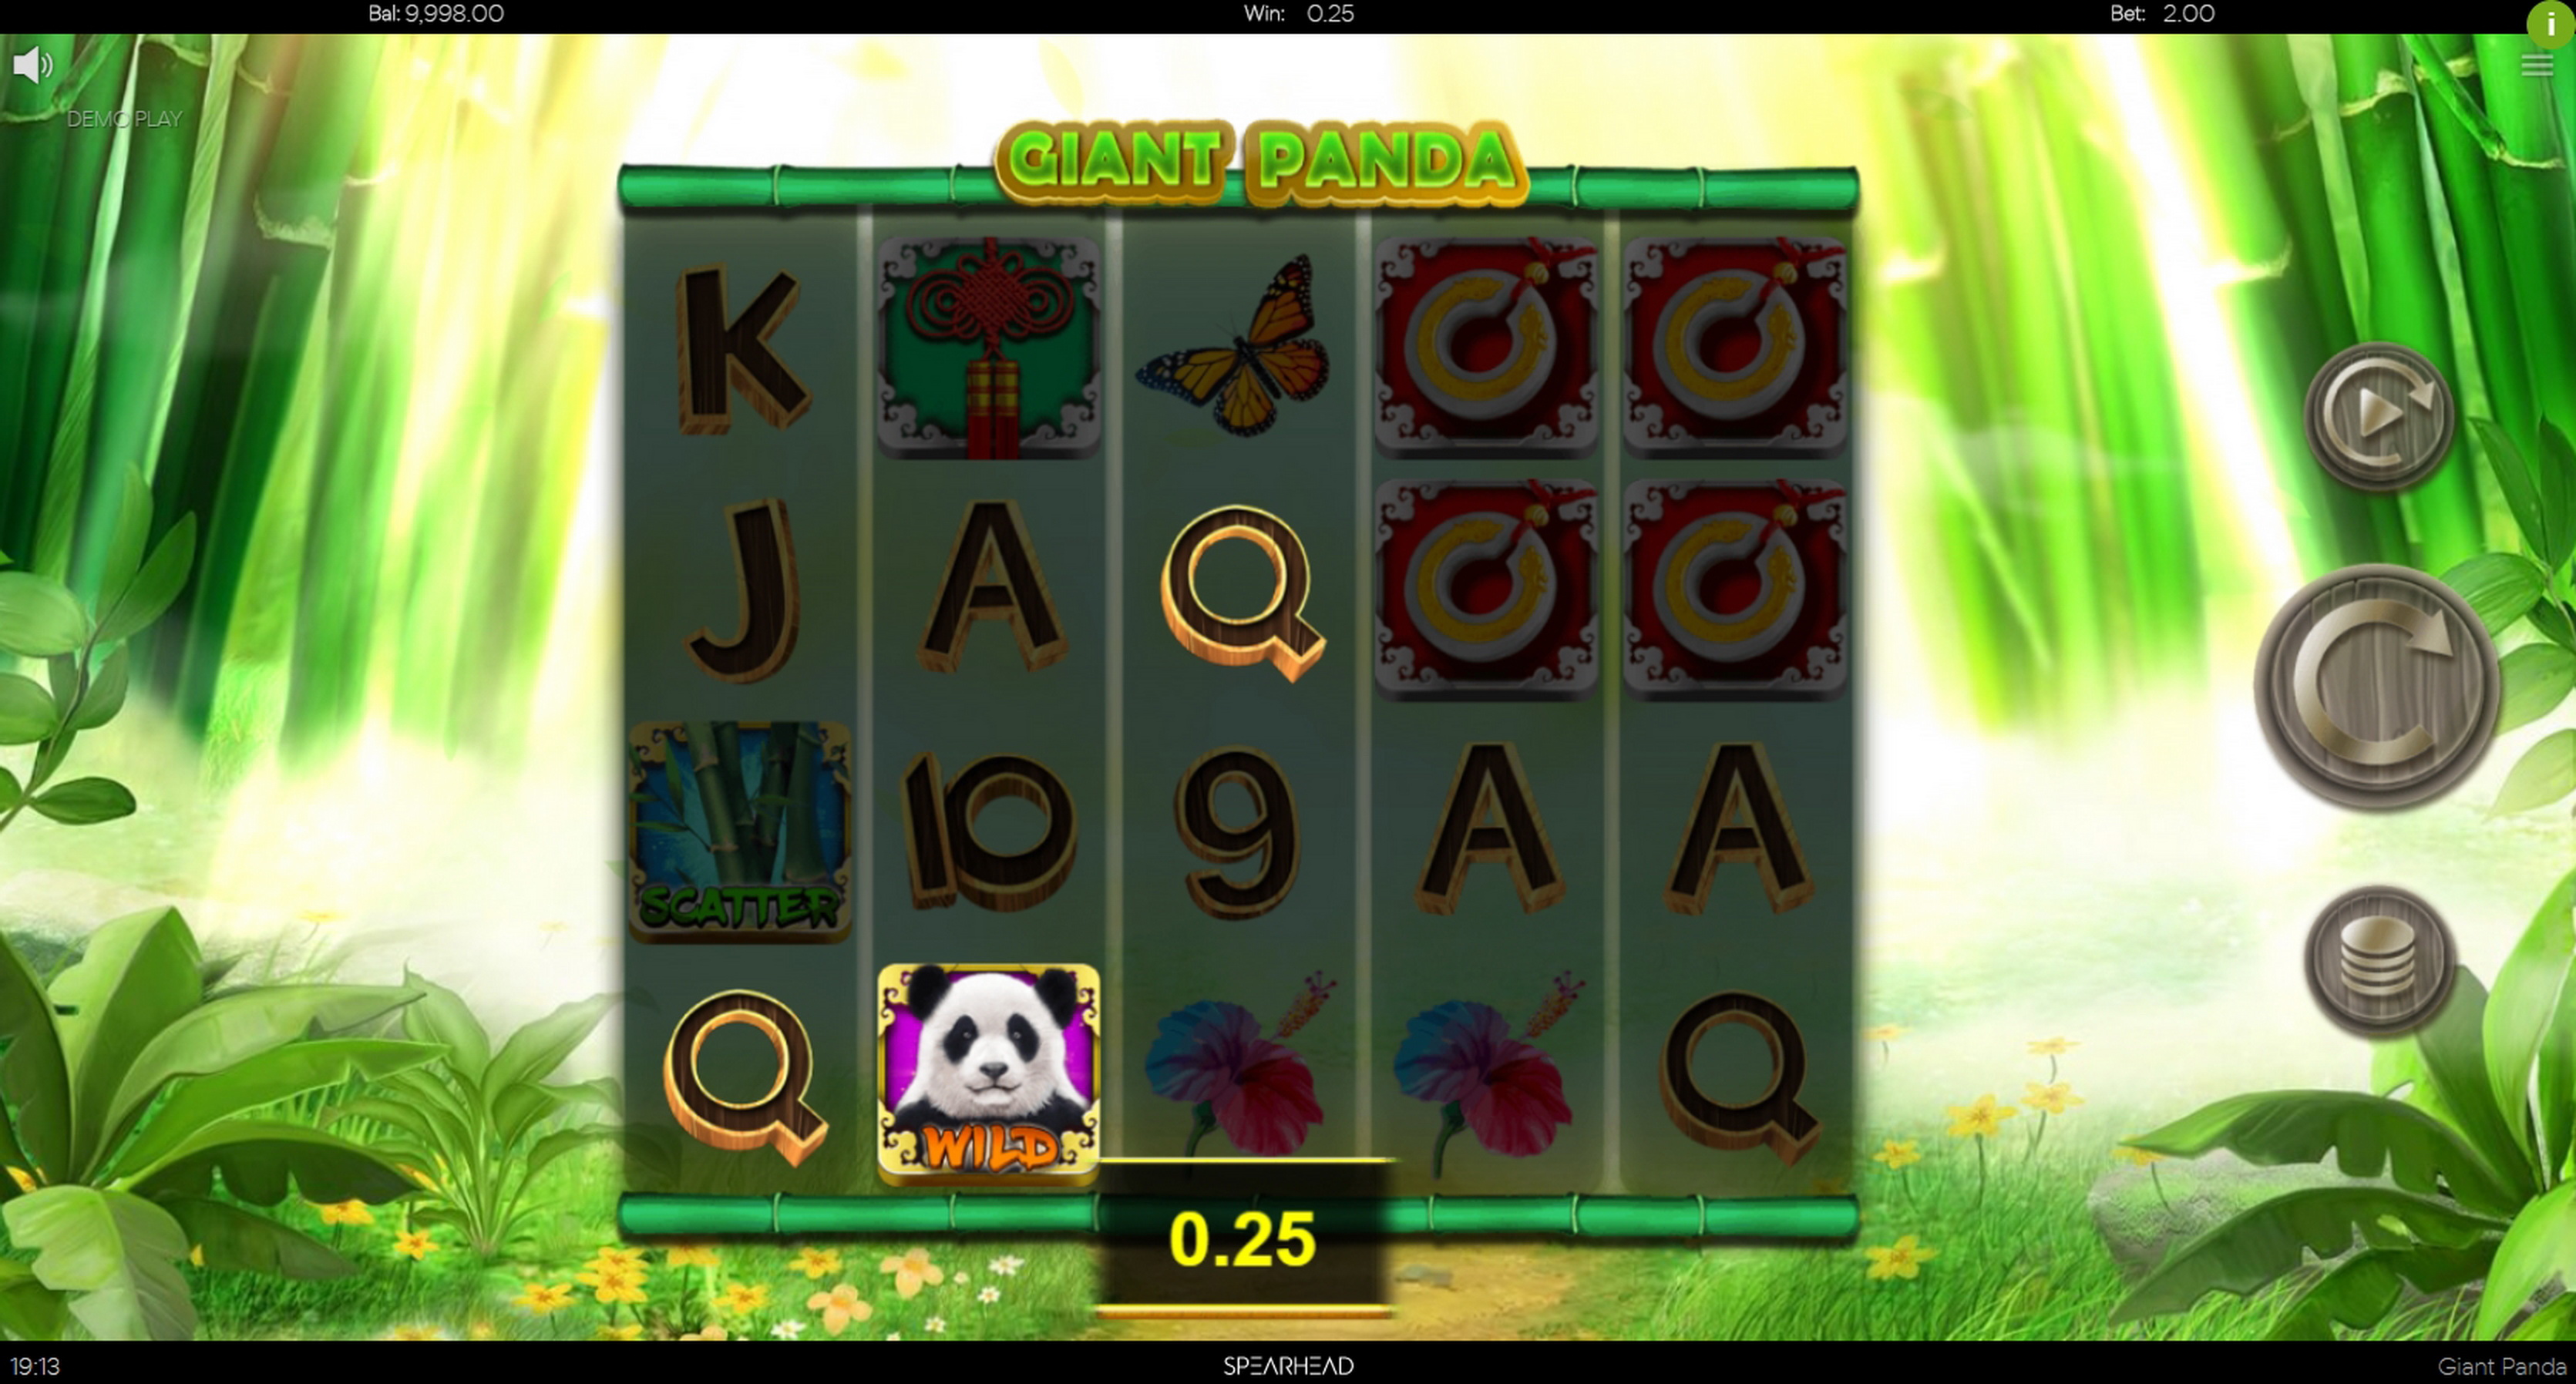 Win Money in Giant Panda Free Slot Game by Spearhead Studios